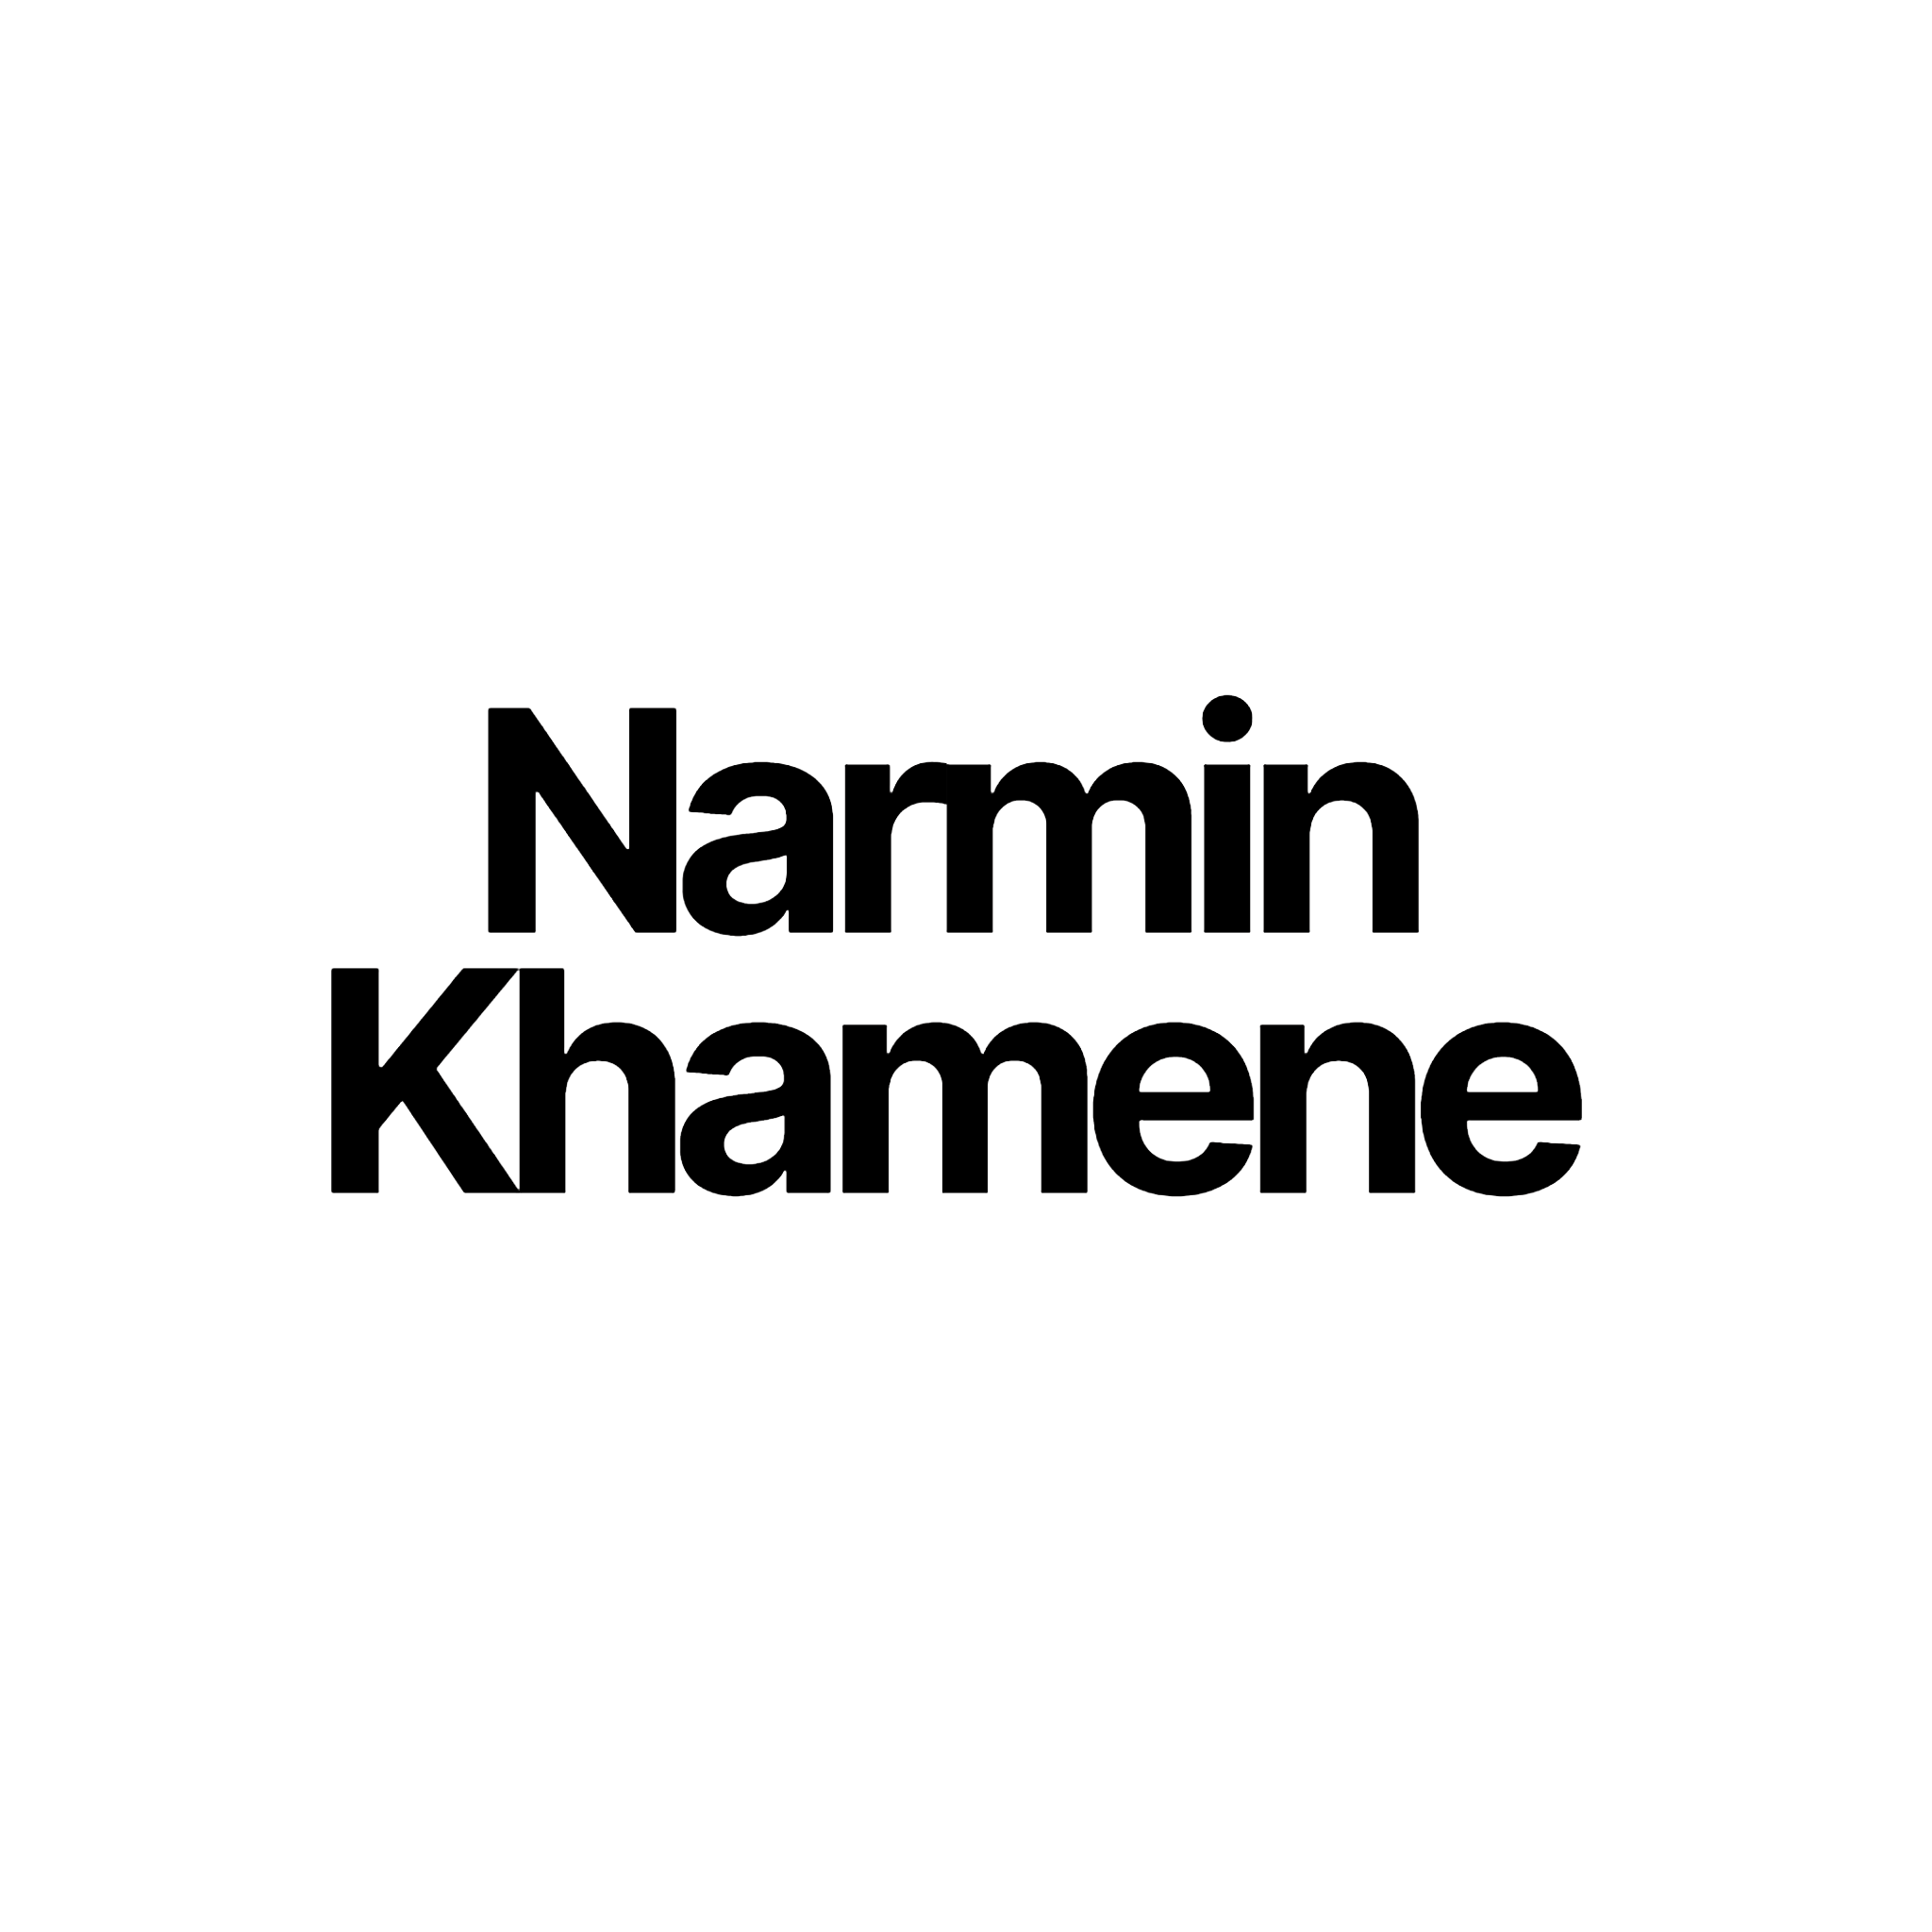 Narmin Khamene l Freelance WordPress Developer